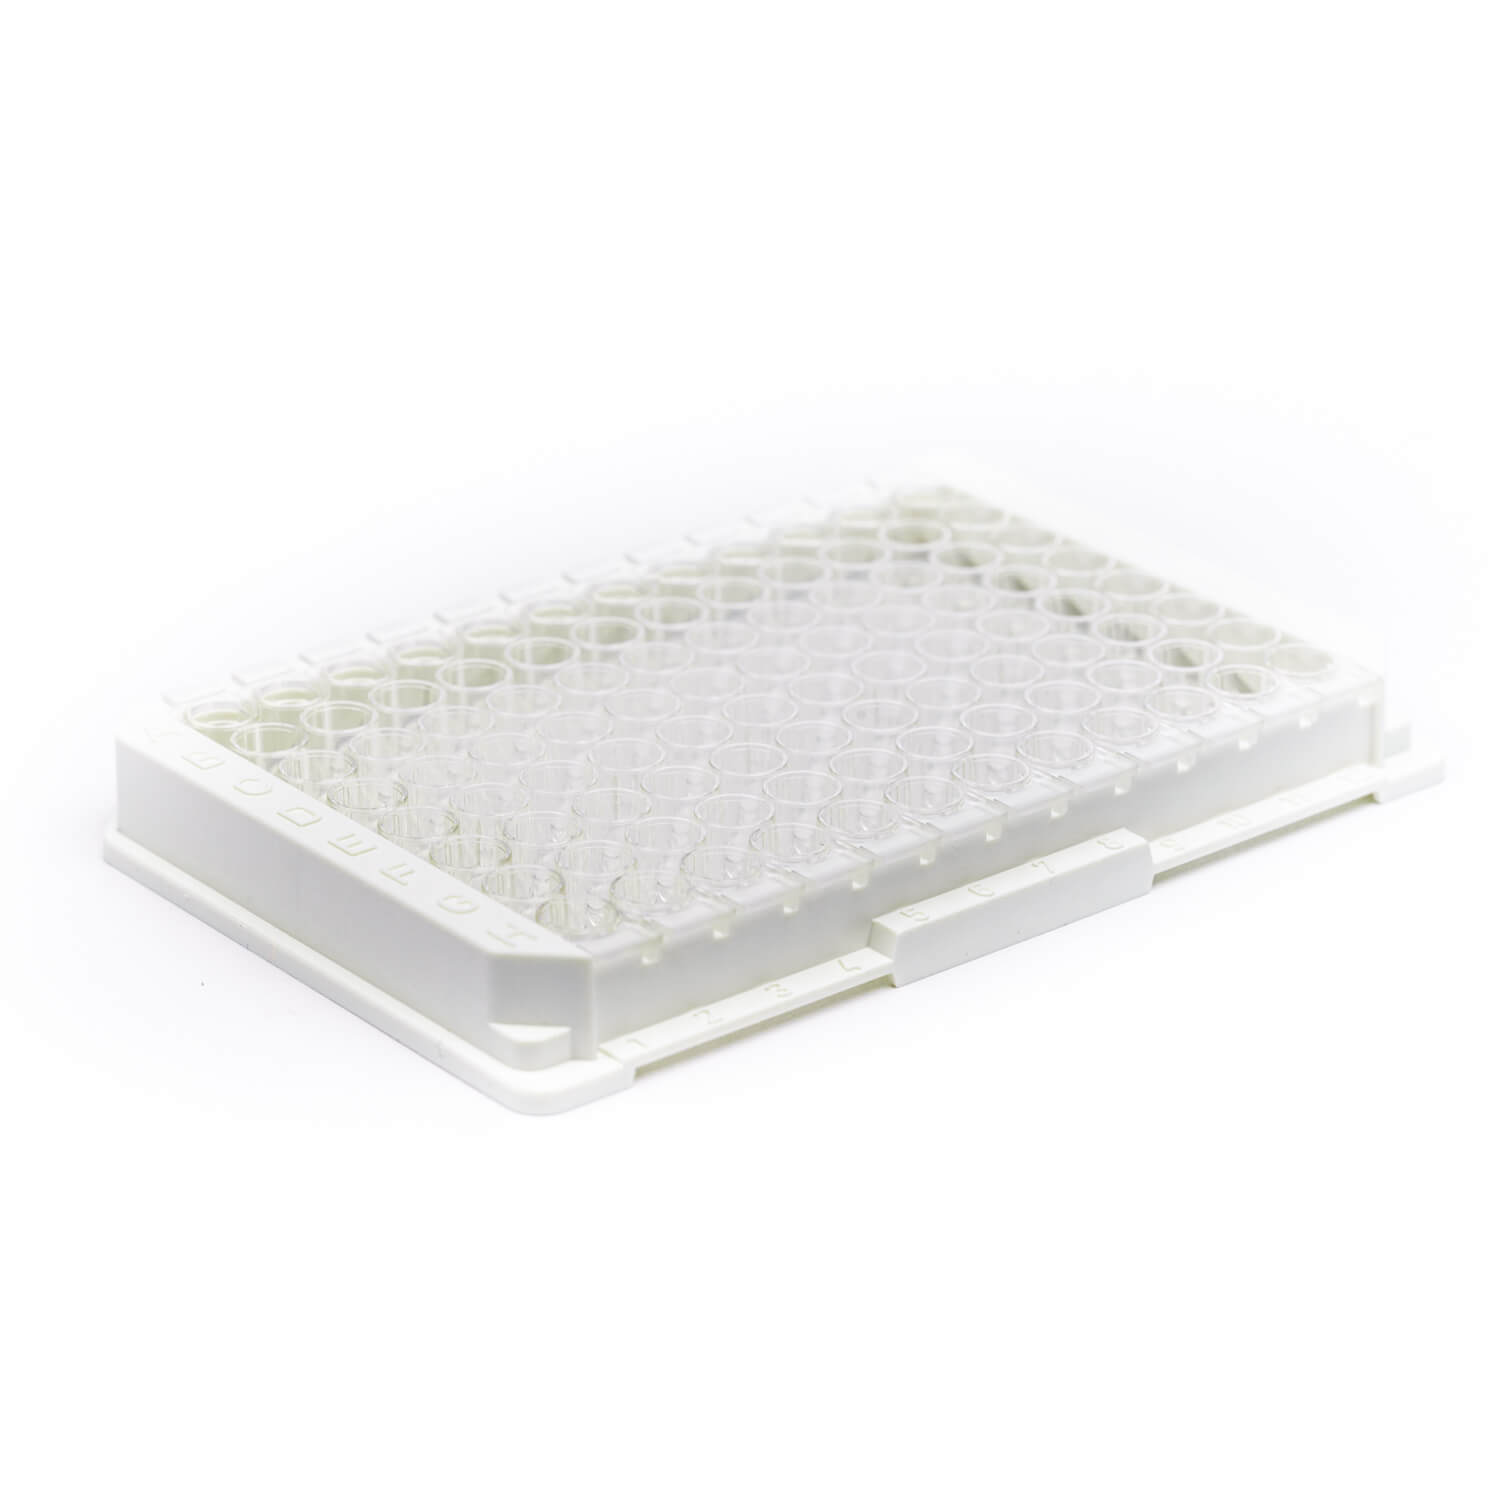 Strep-Tactin®XT coated microplate